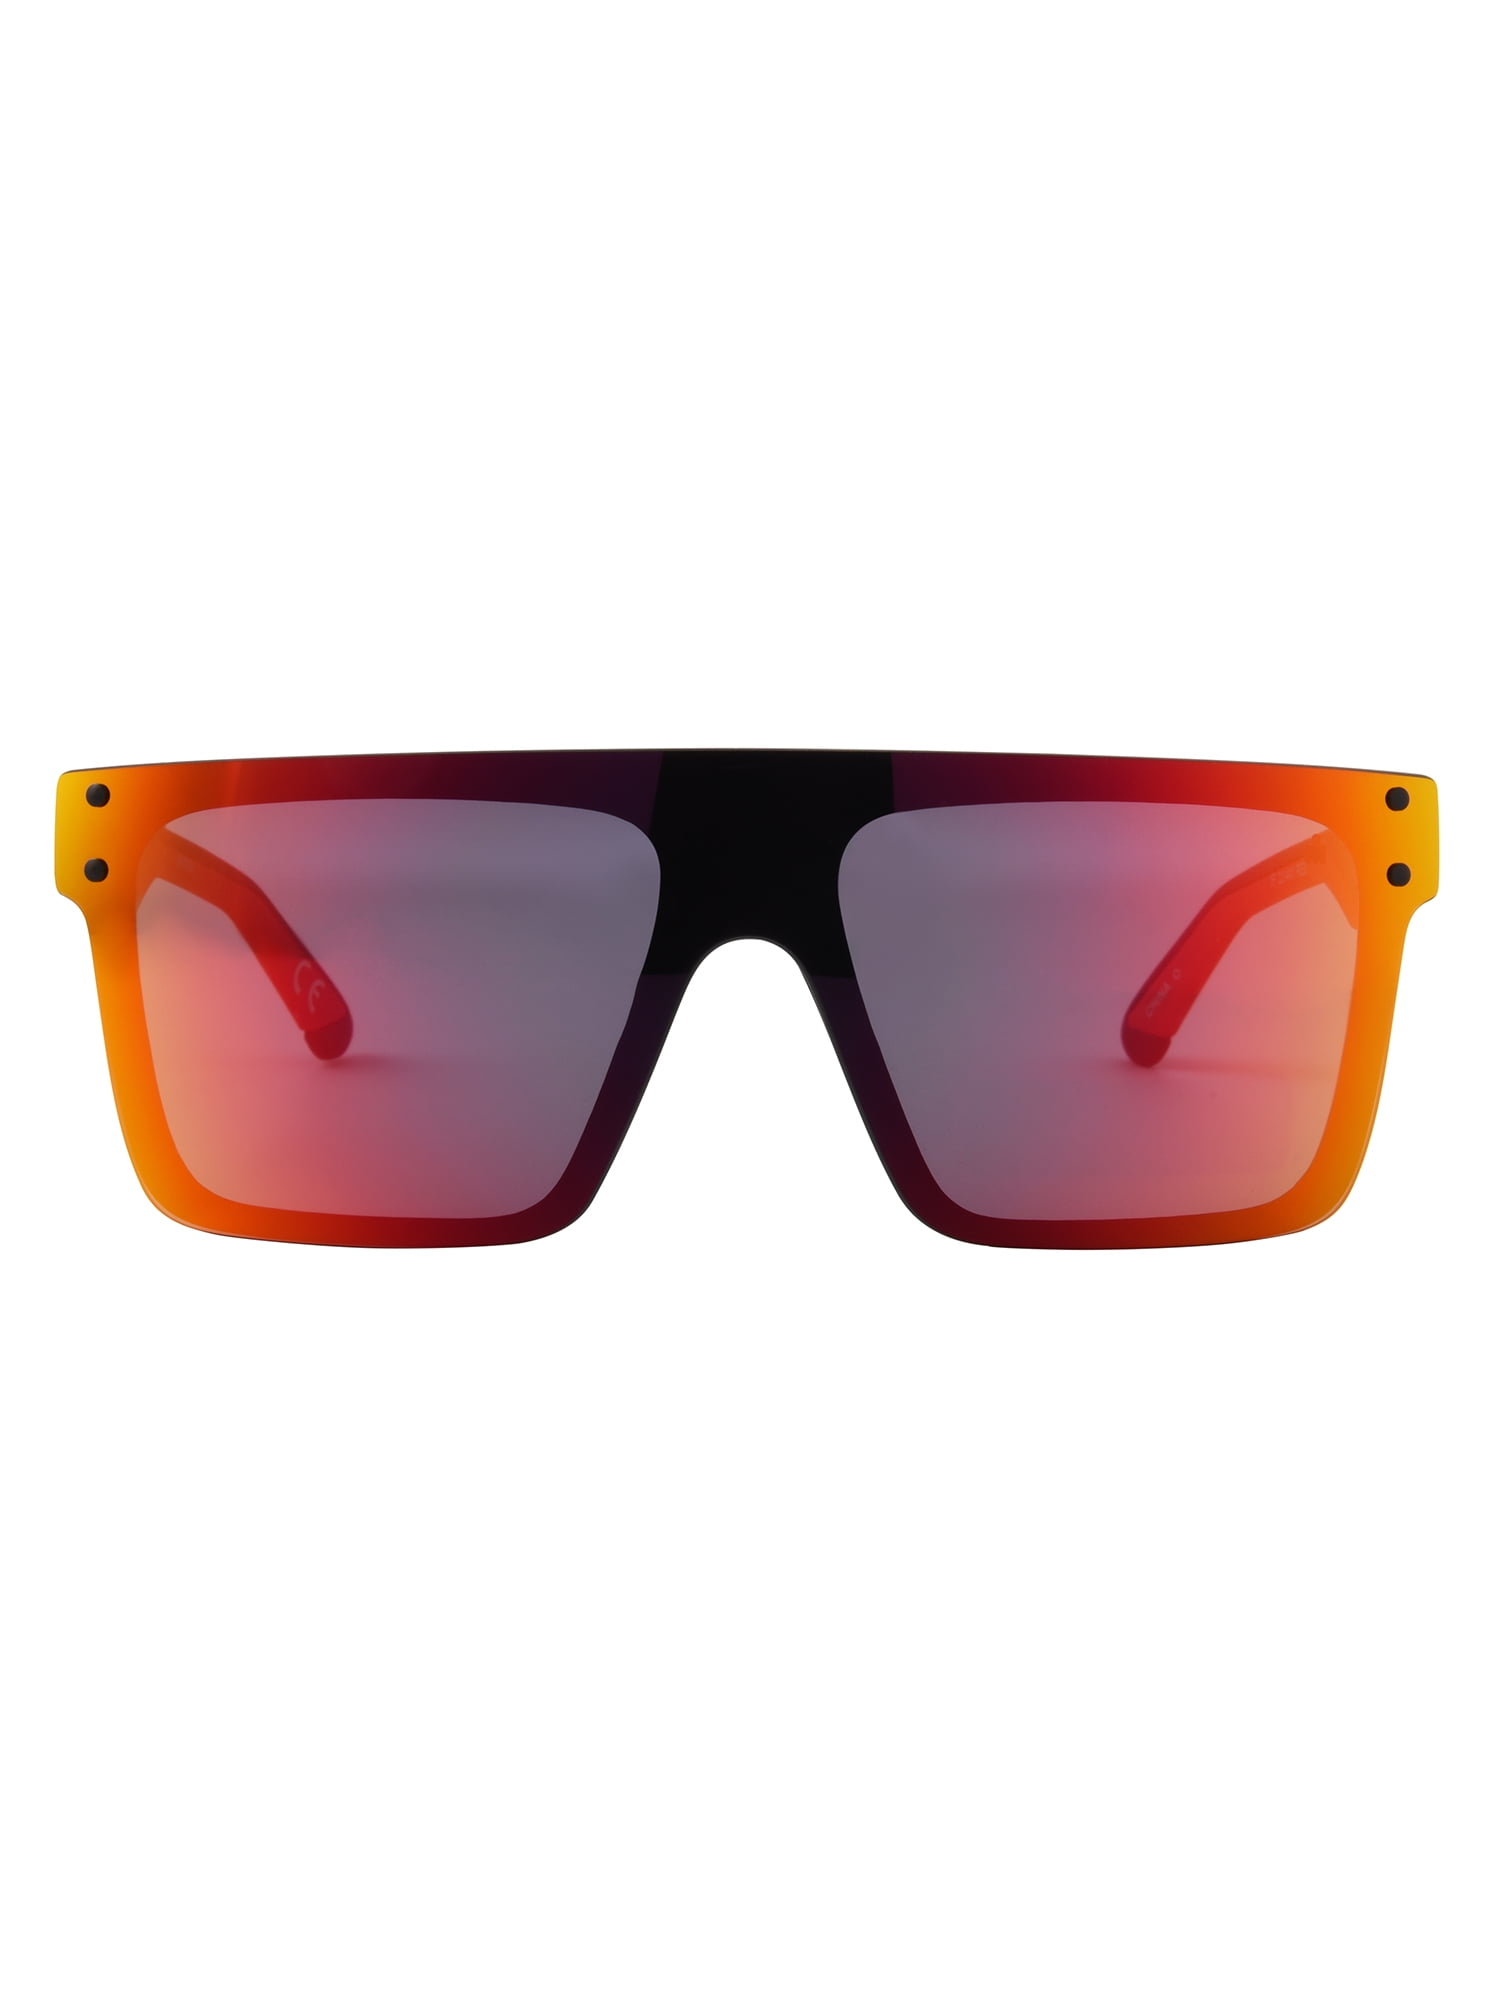 Piranha Eyewear Spirit Hydrofloat Unisex Sport Sunglasses with